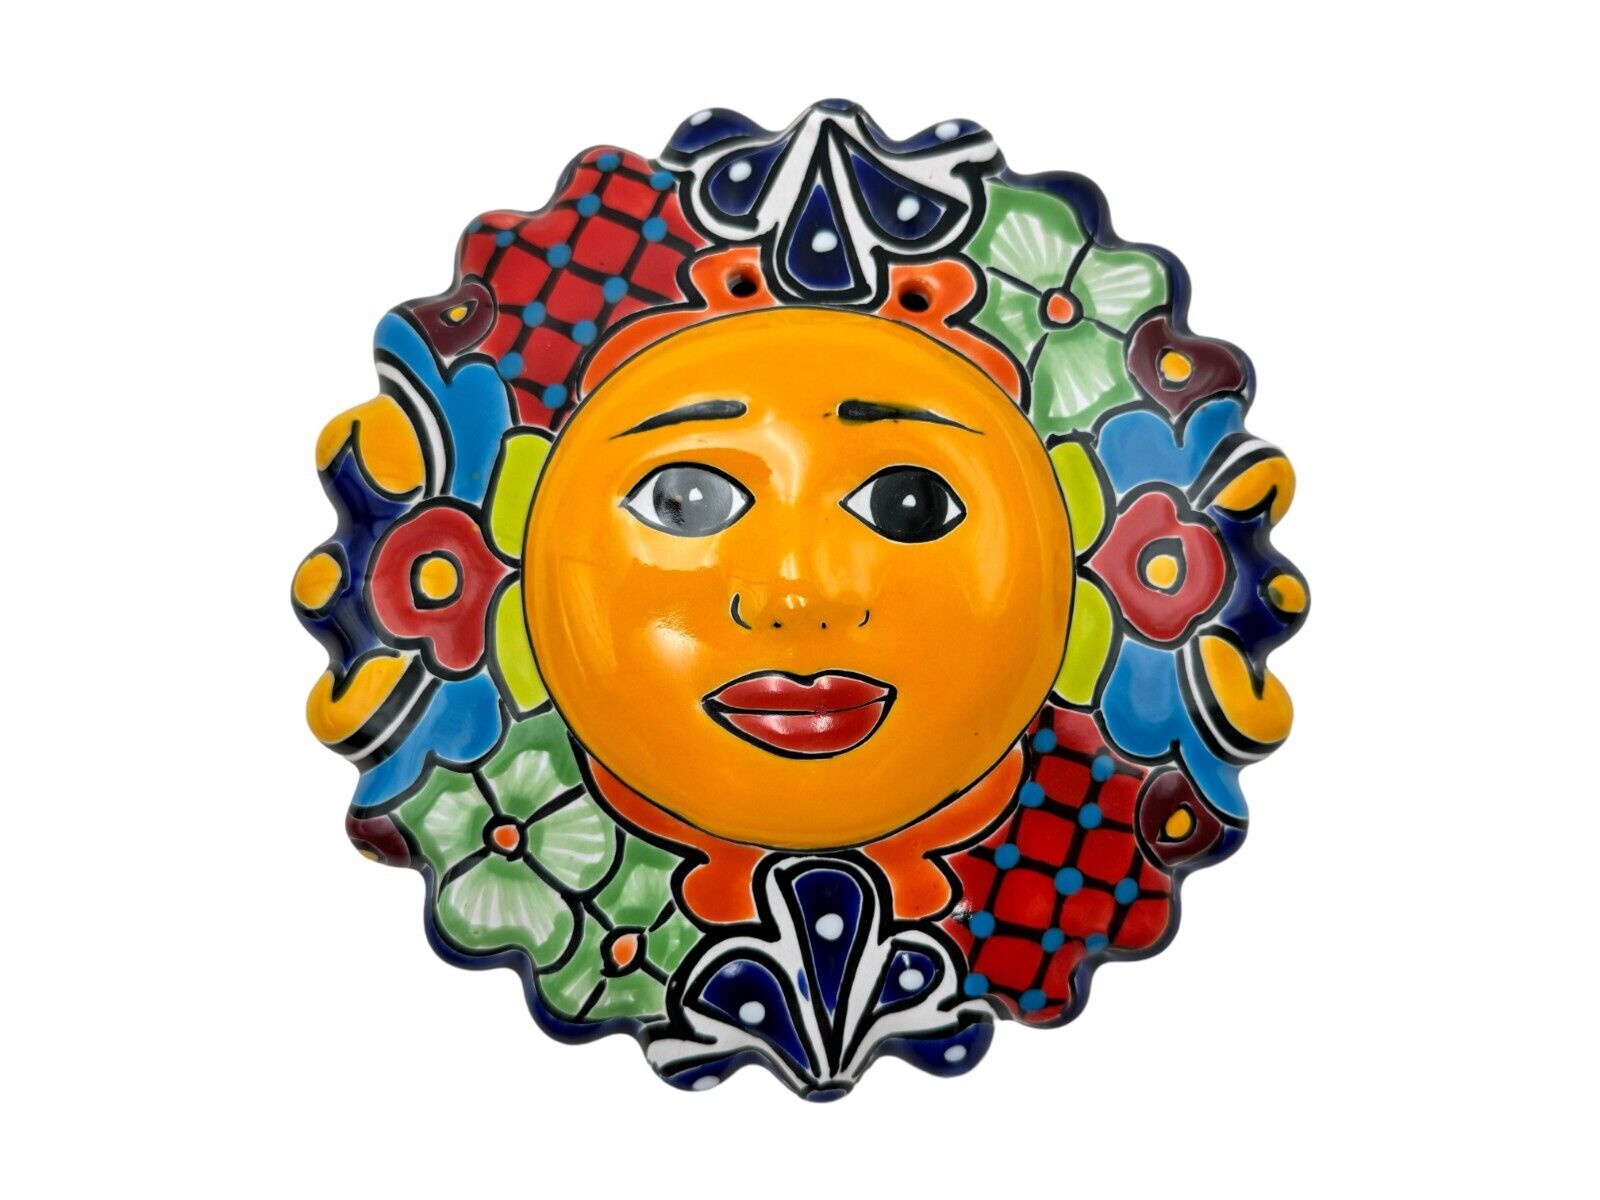 Talavera Sun Face Mexican Pottery Folk Art Hand Painted Home Decor 9.5